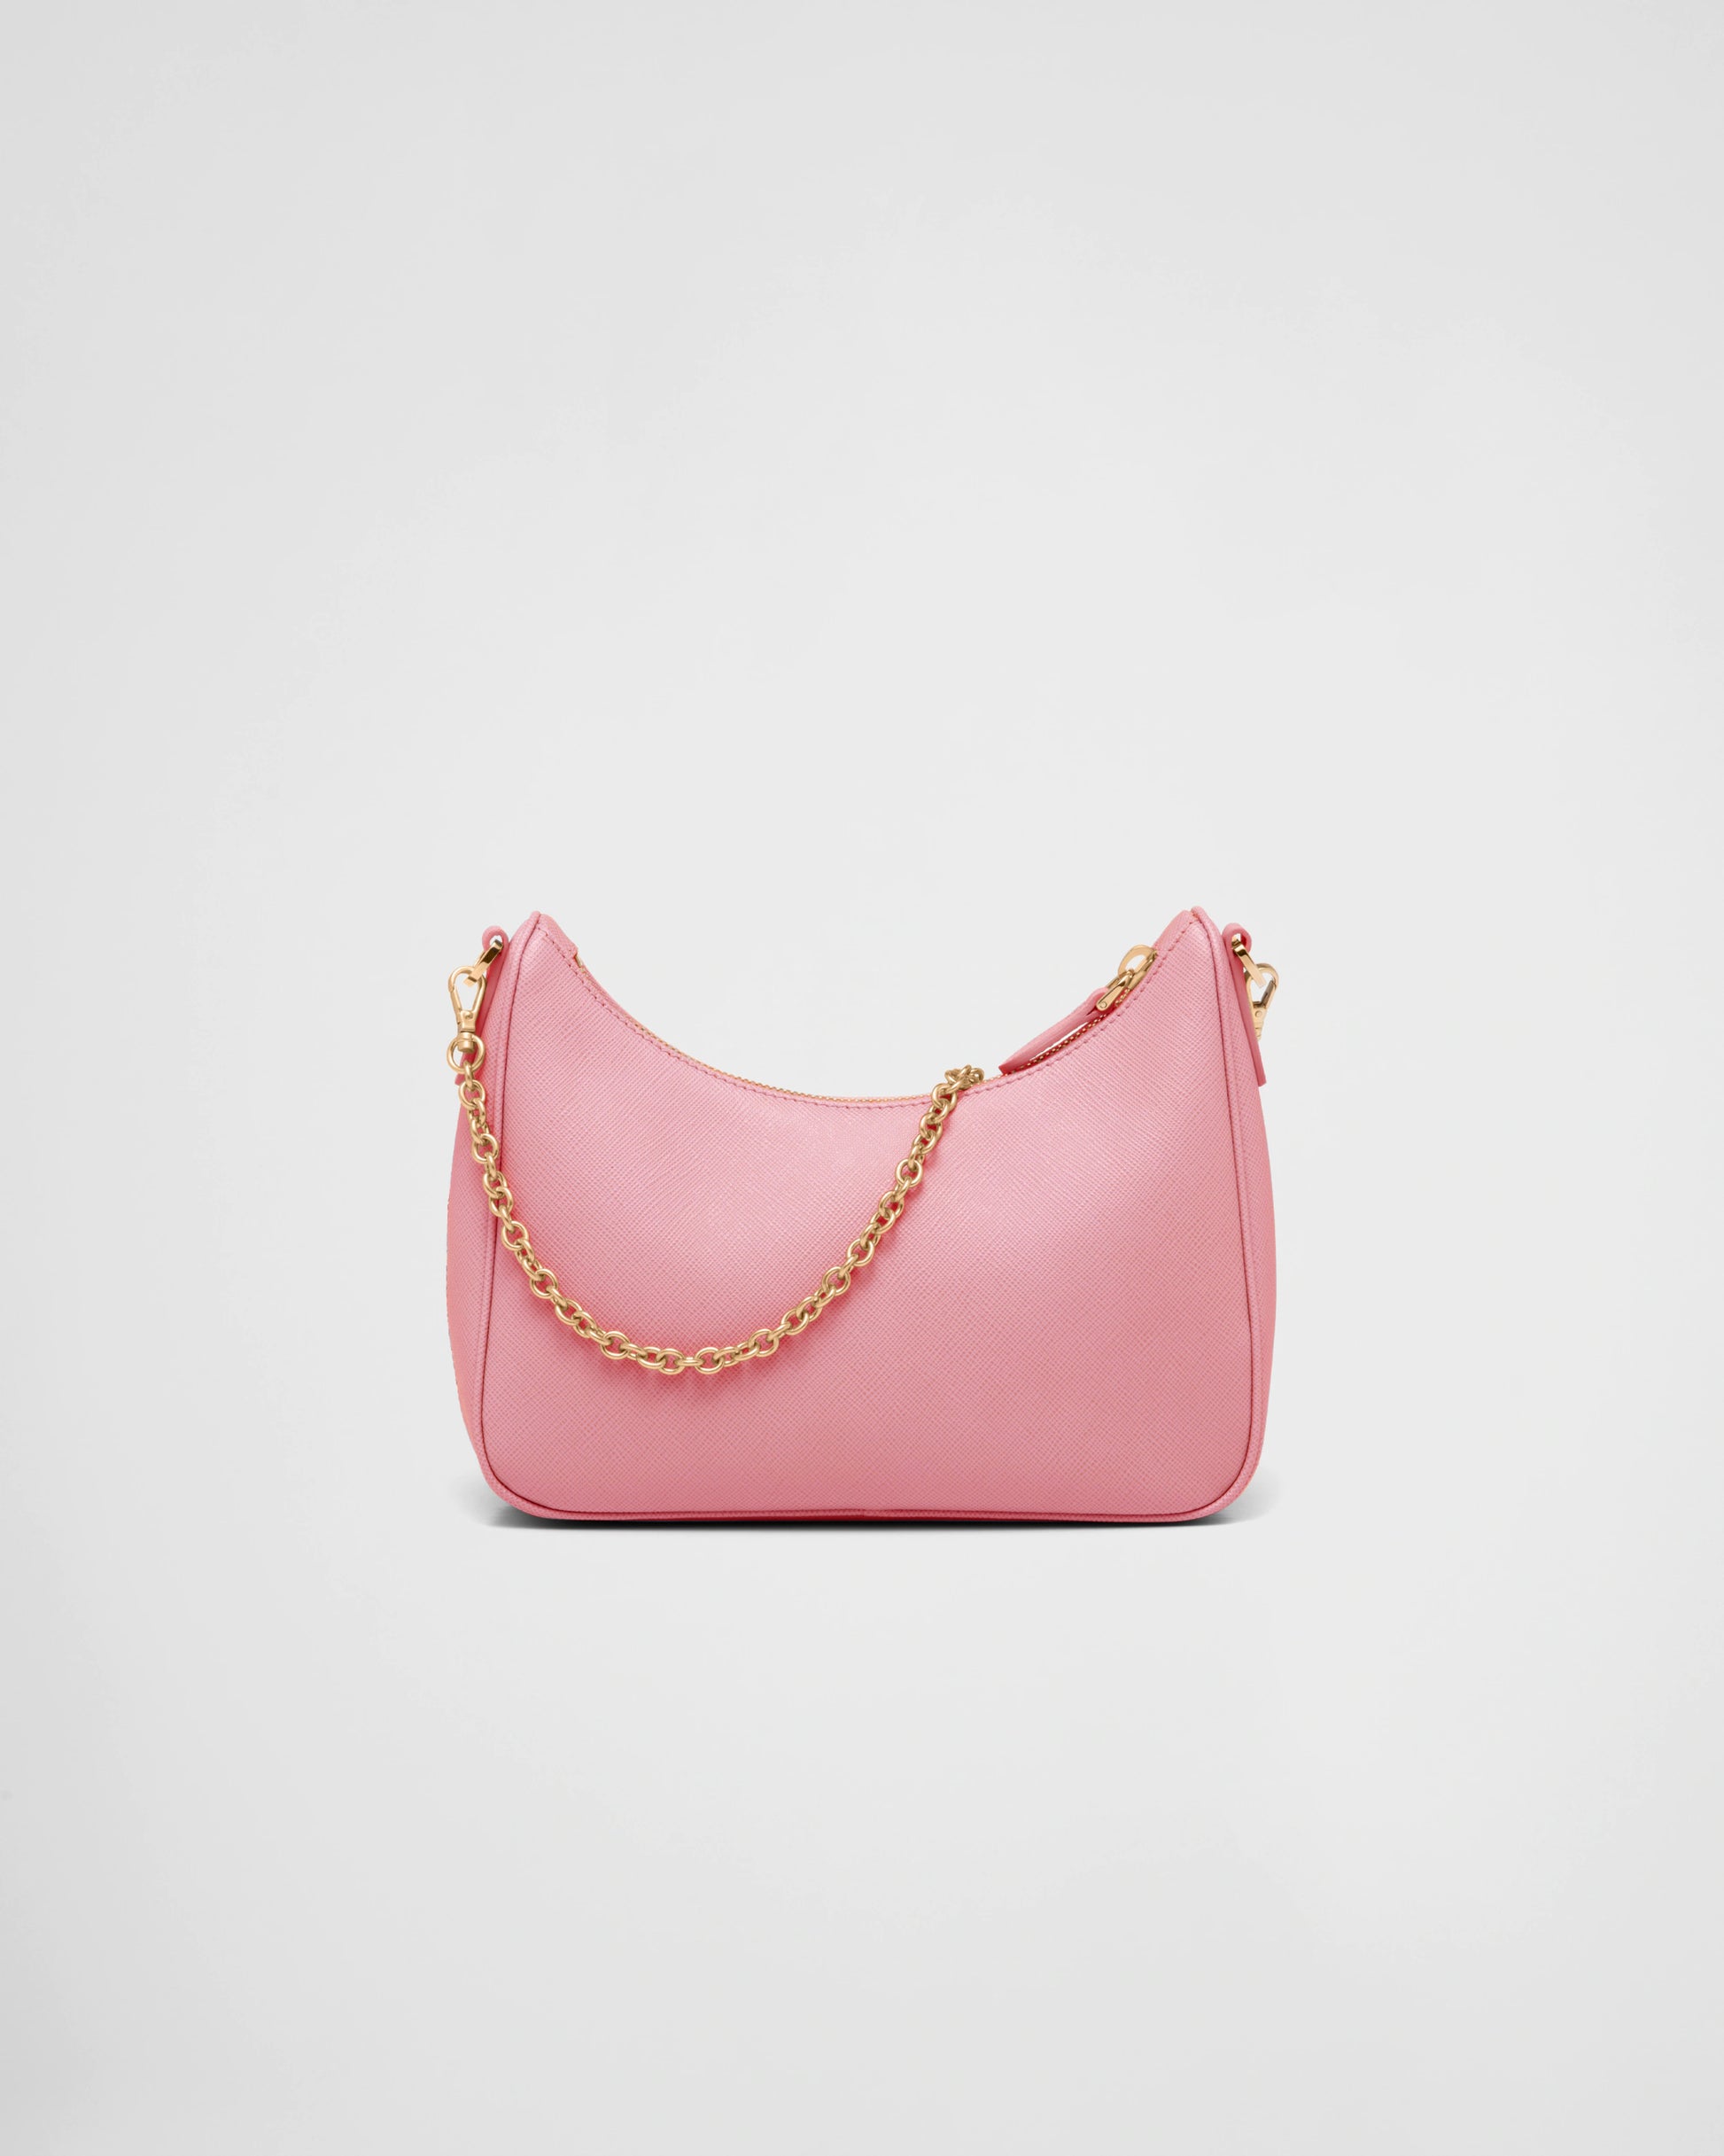 Prada Re-Edition 2005 Saffiano Leather Bag - Petal Pink